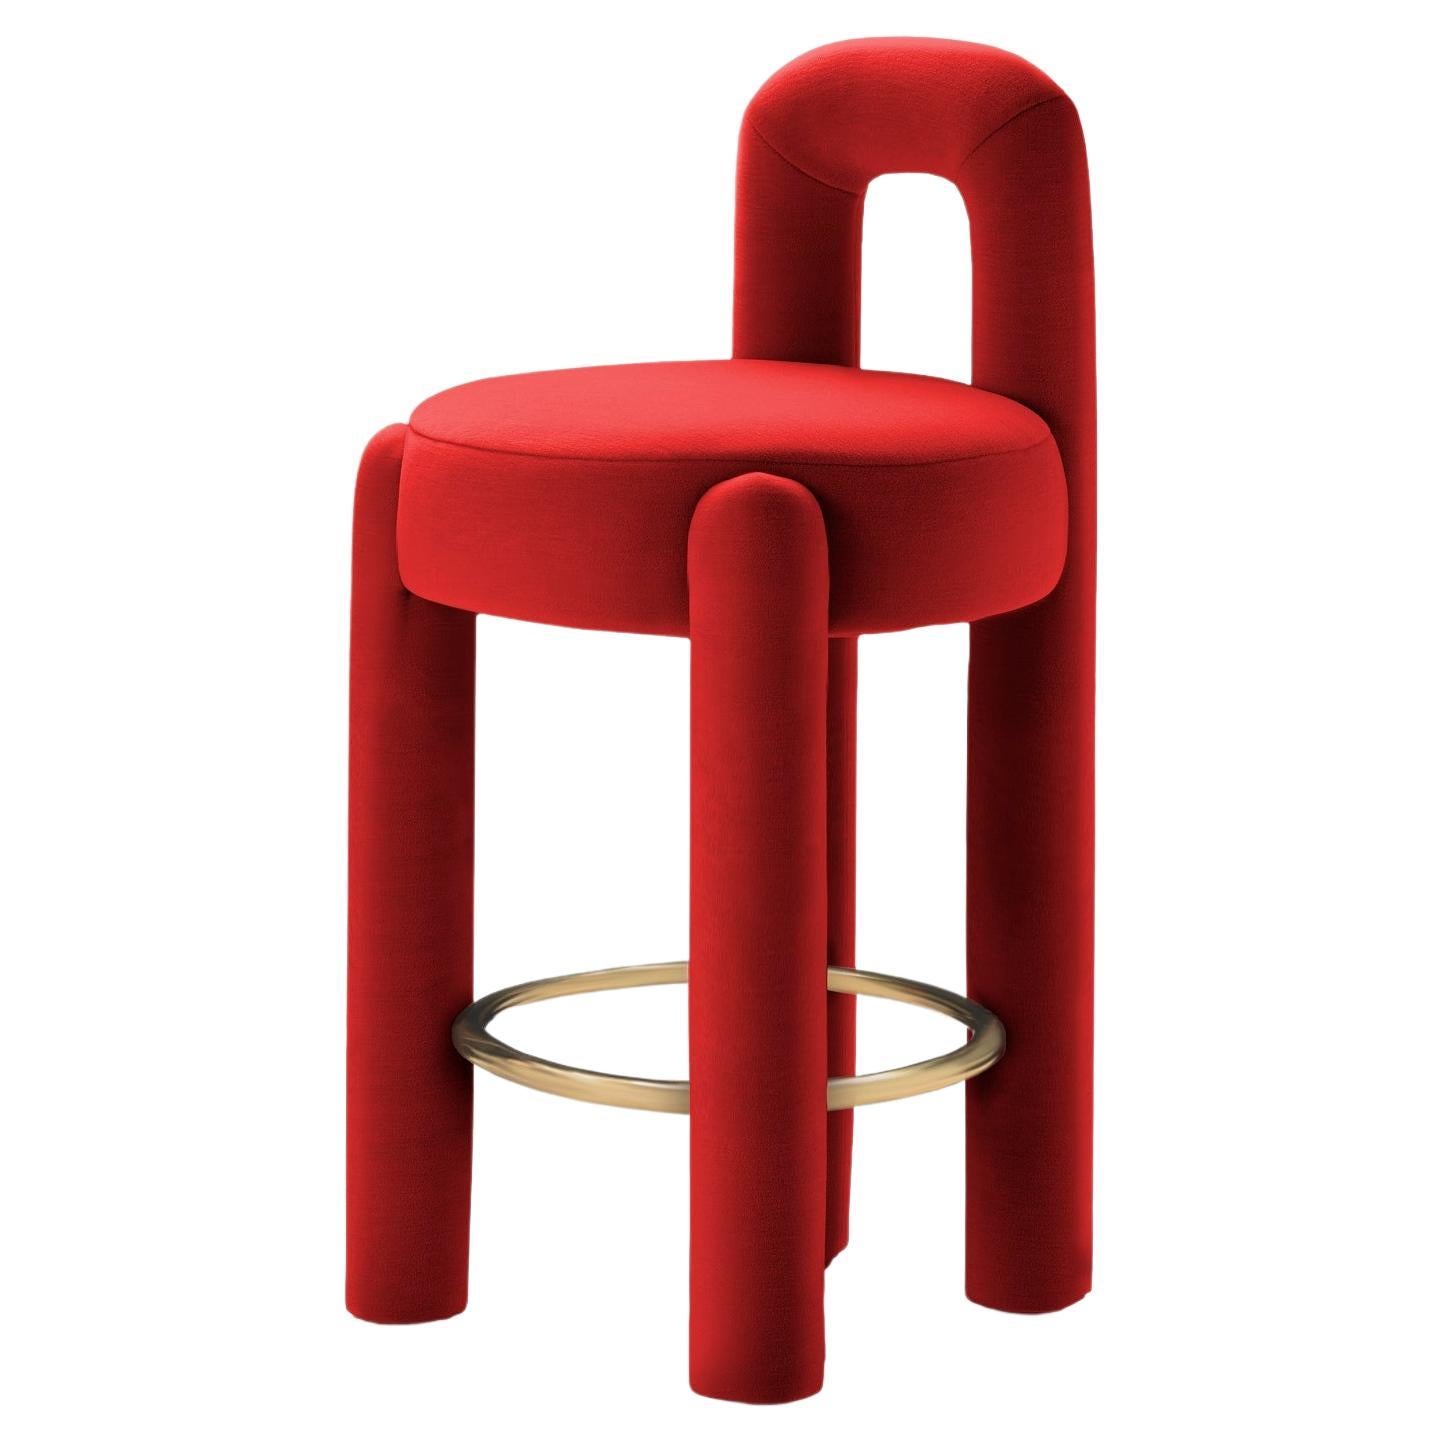 DOOQ! Organic Modern Marlon Counter Chair in Red Kvadrat by P. Franceschini For Sale